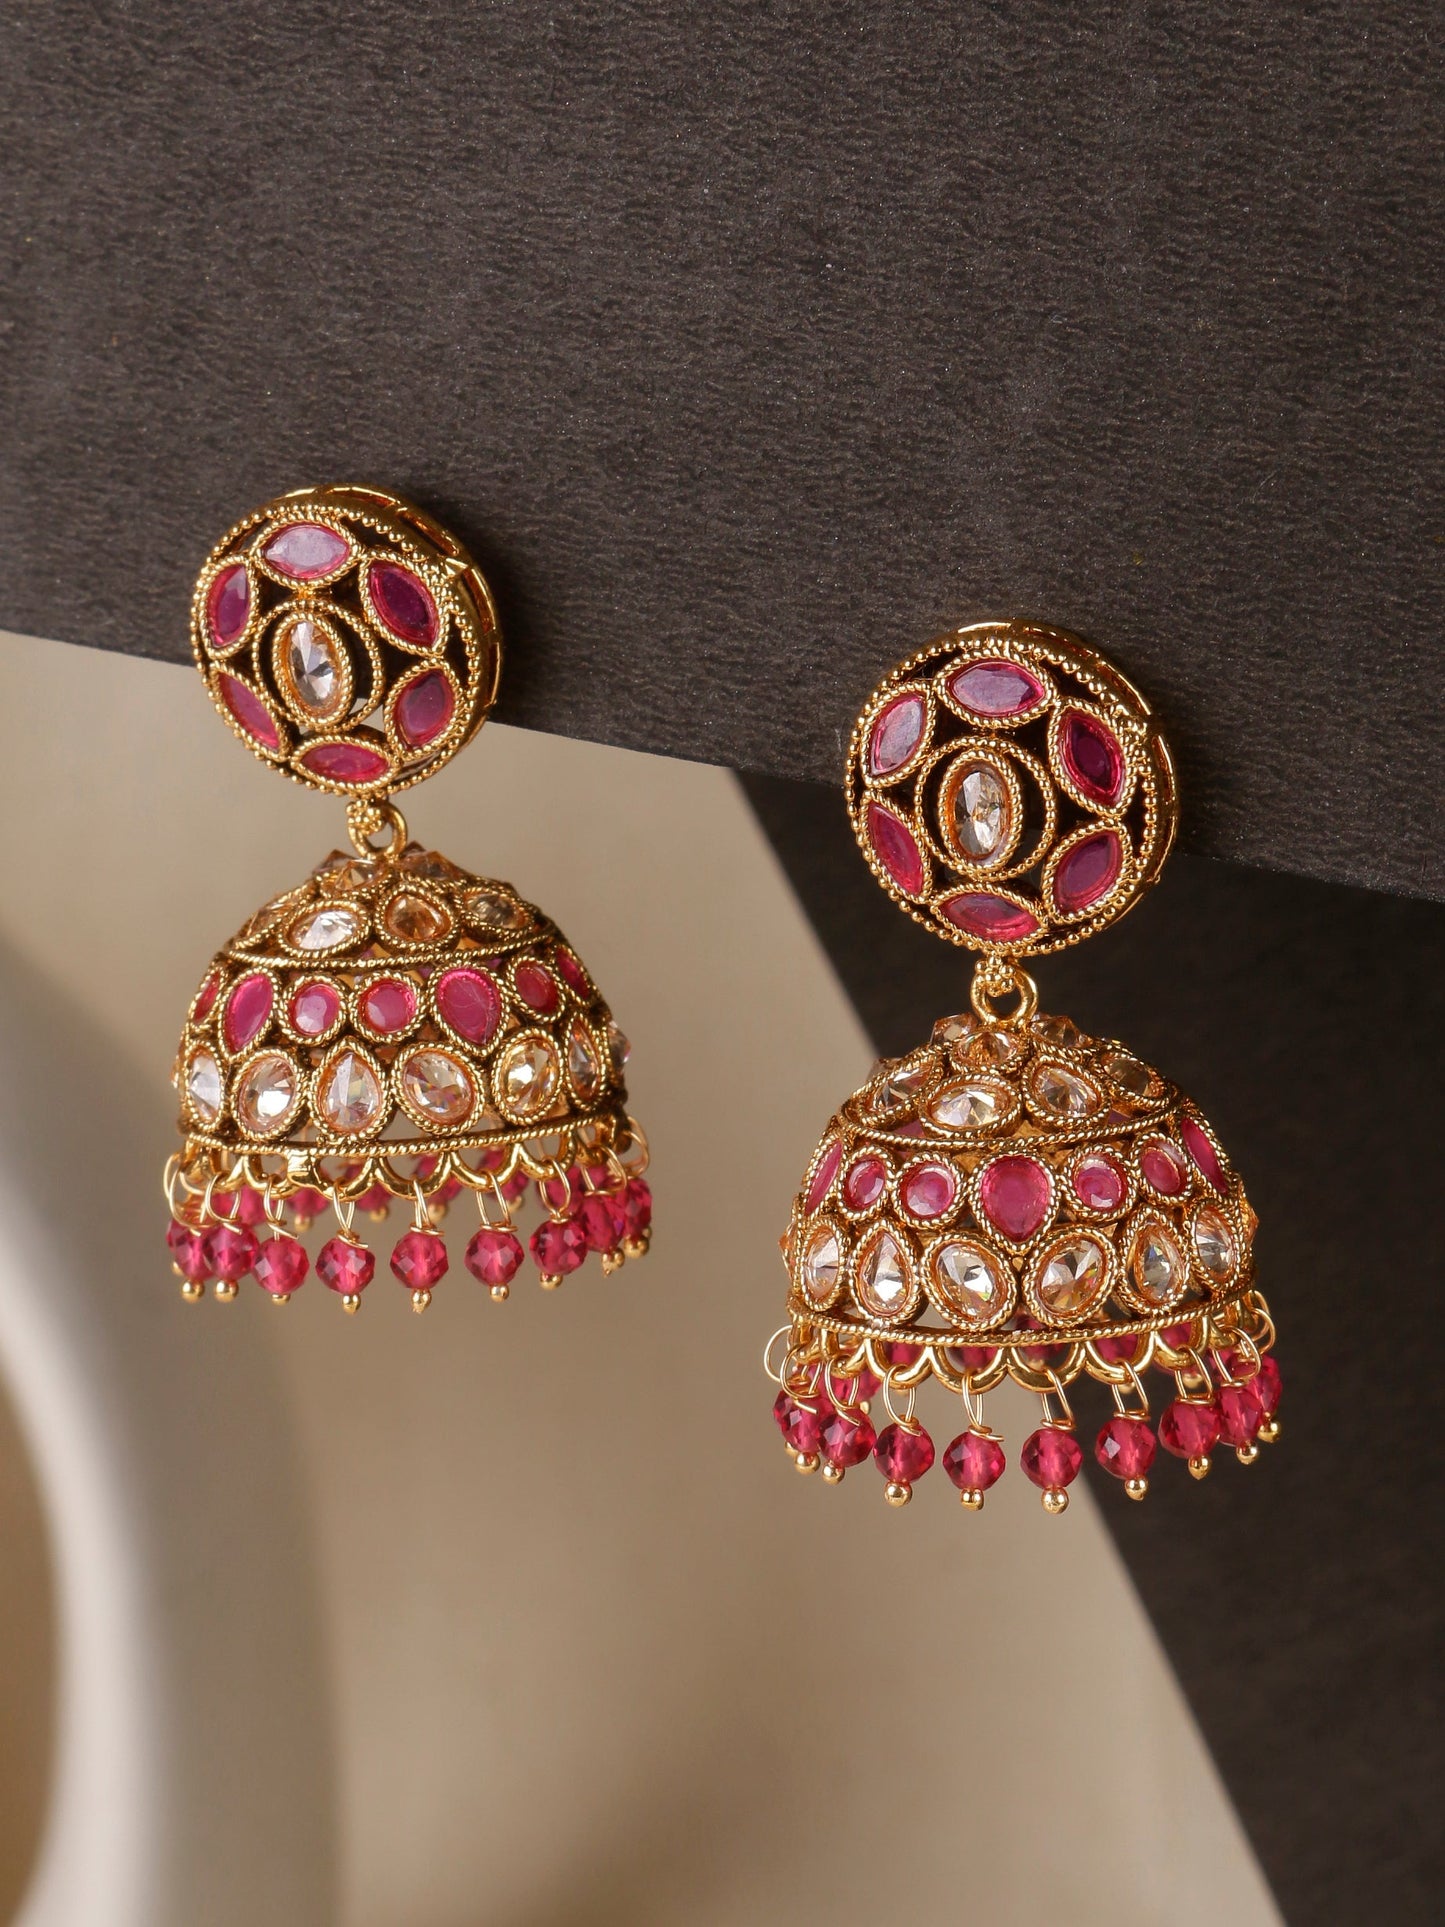 Swisni Alloy Golden Jhumki Earring Pink Beads For Women|For Girls|Gifting|Anniversary|Birthday|Girlfriend